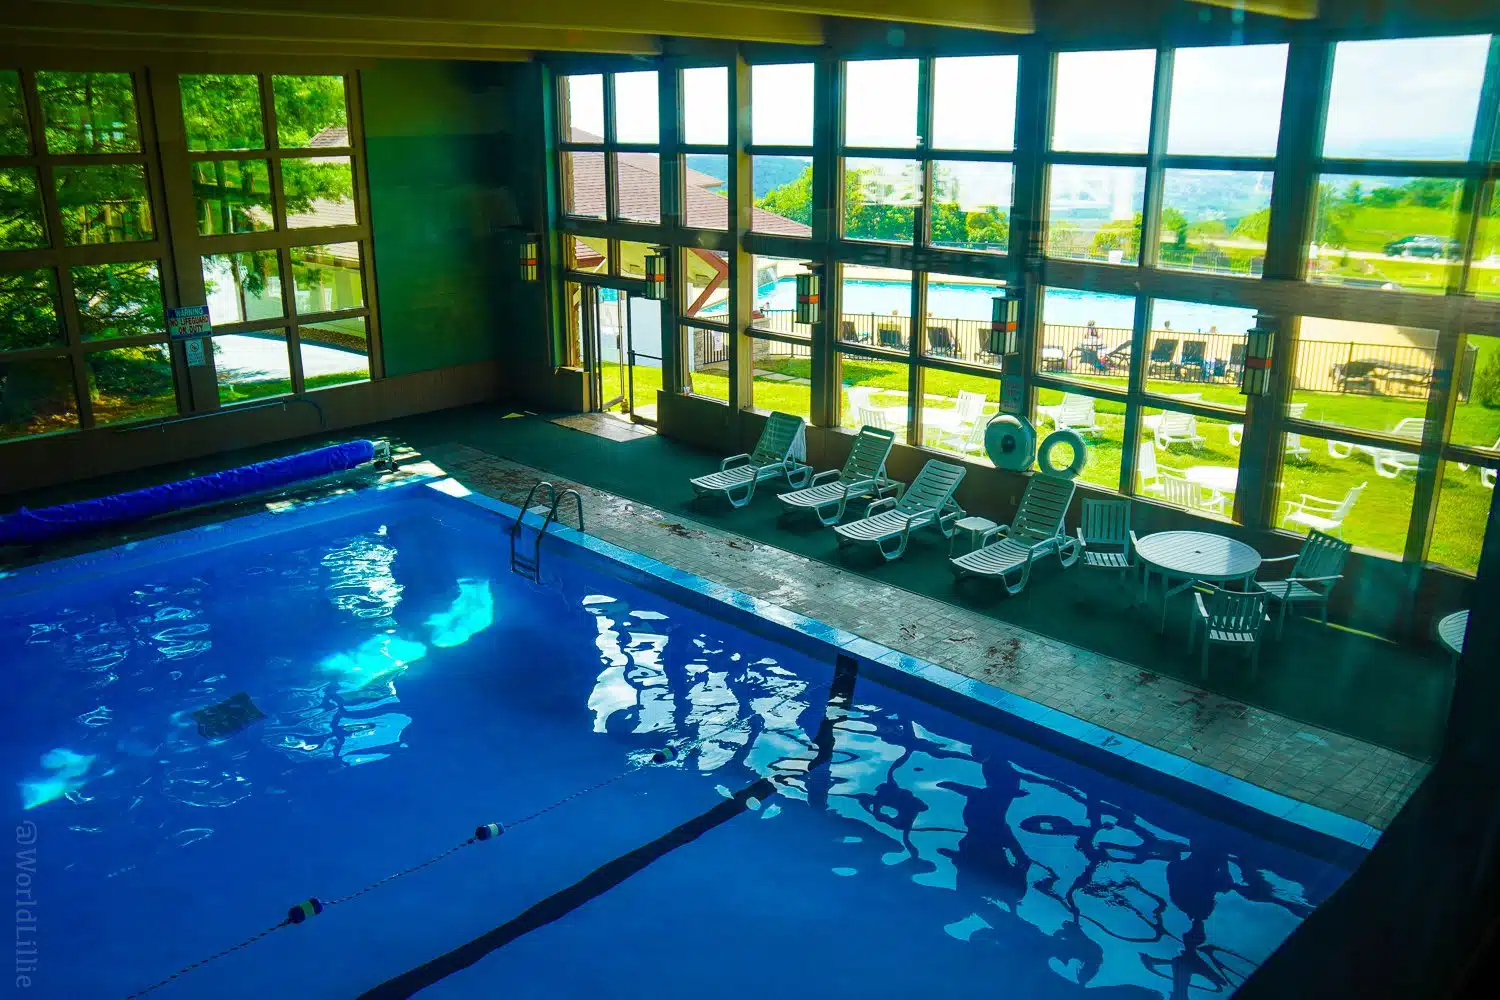 The indoor pool at Summit Inn.